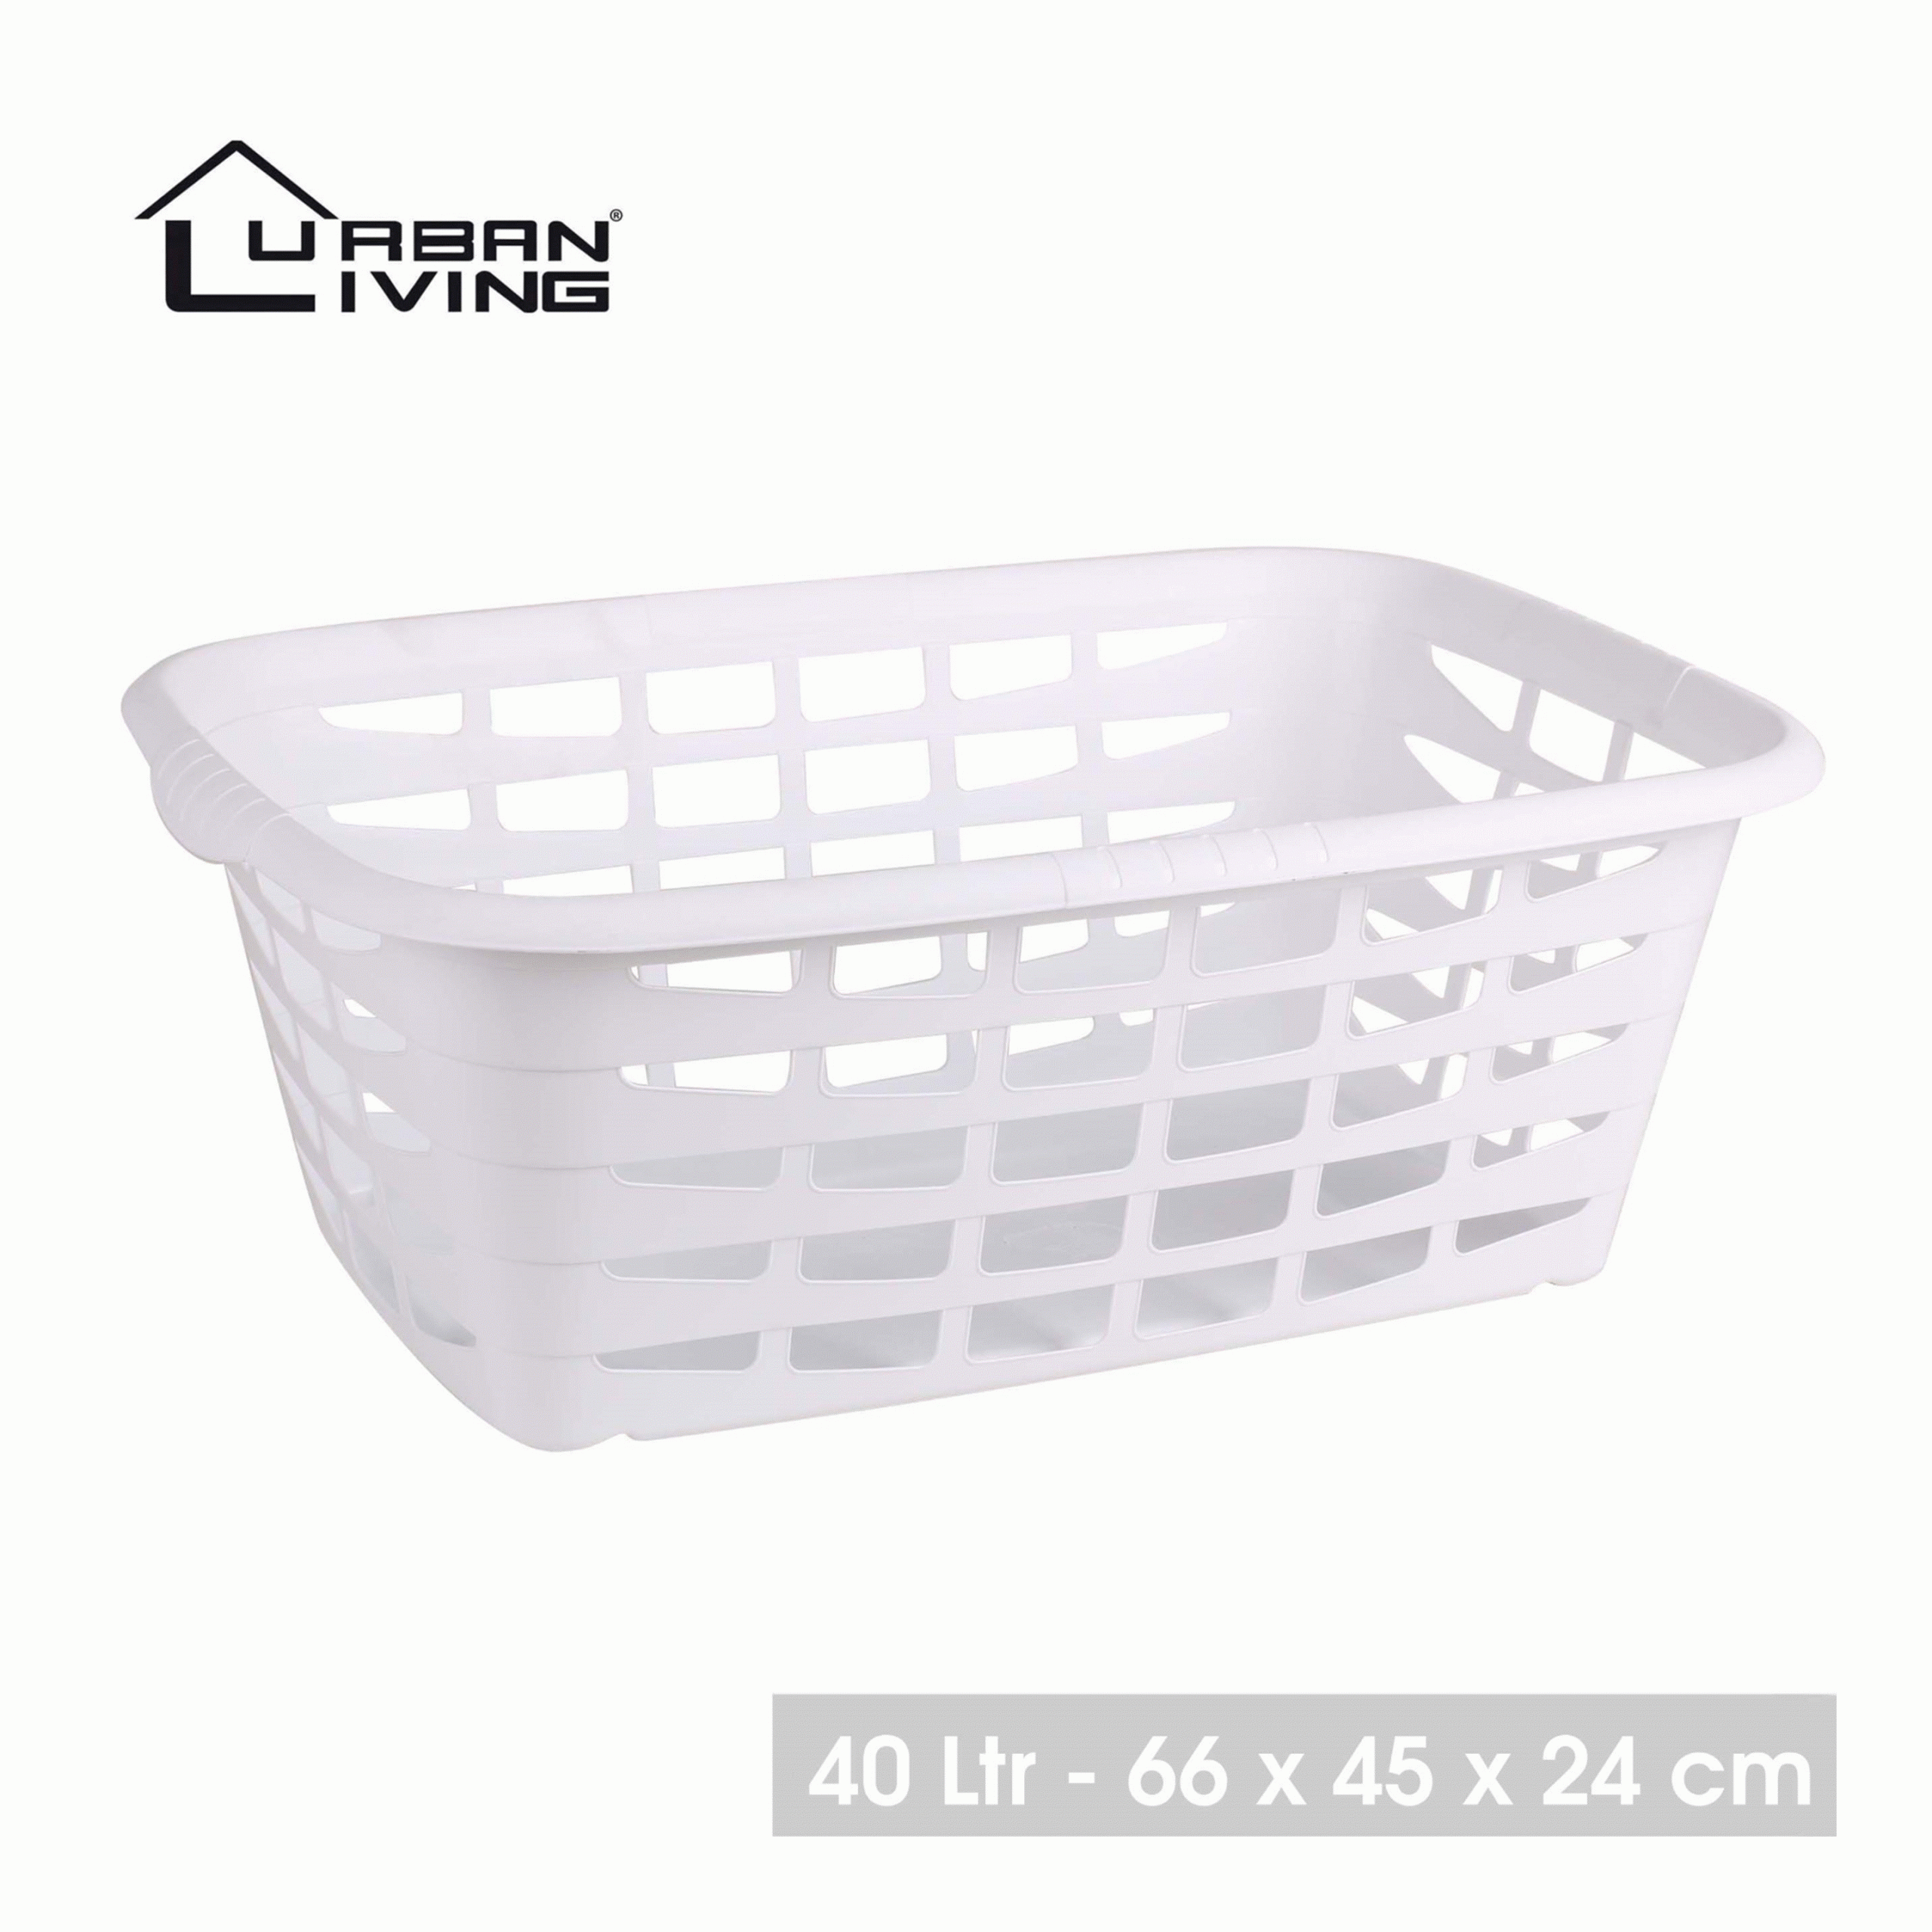 40lt Laundry Basket Urban Living – Hardware Heaven